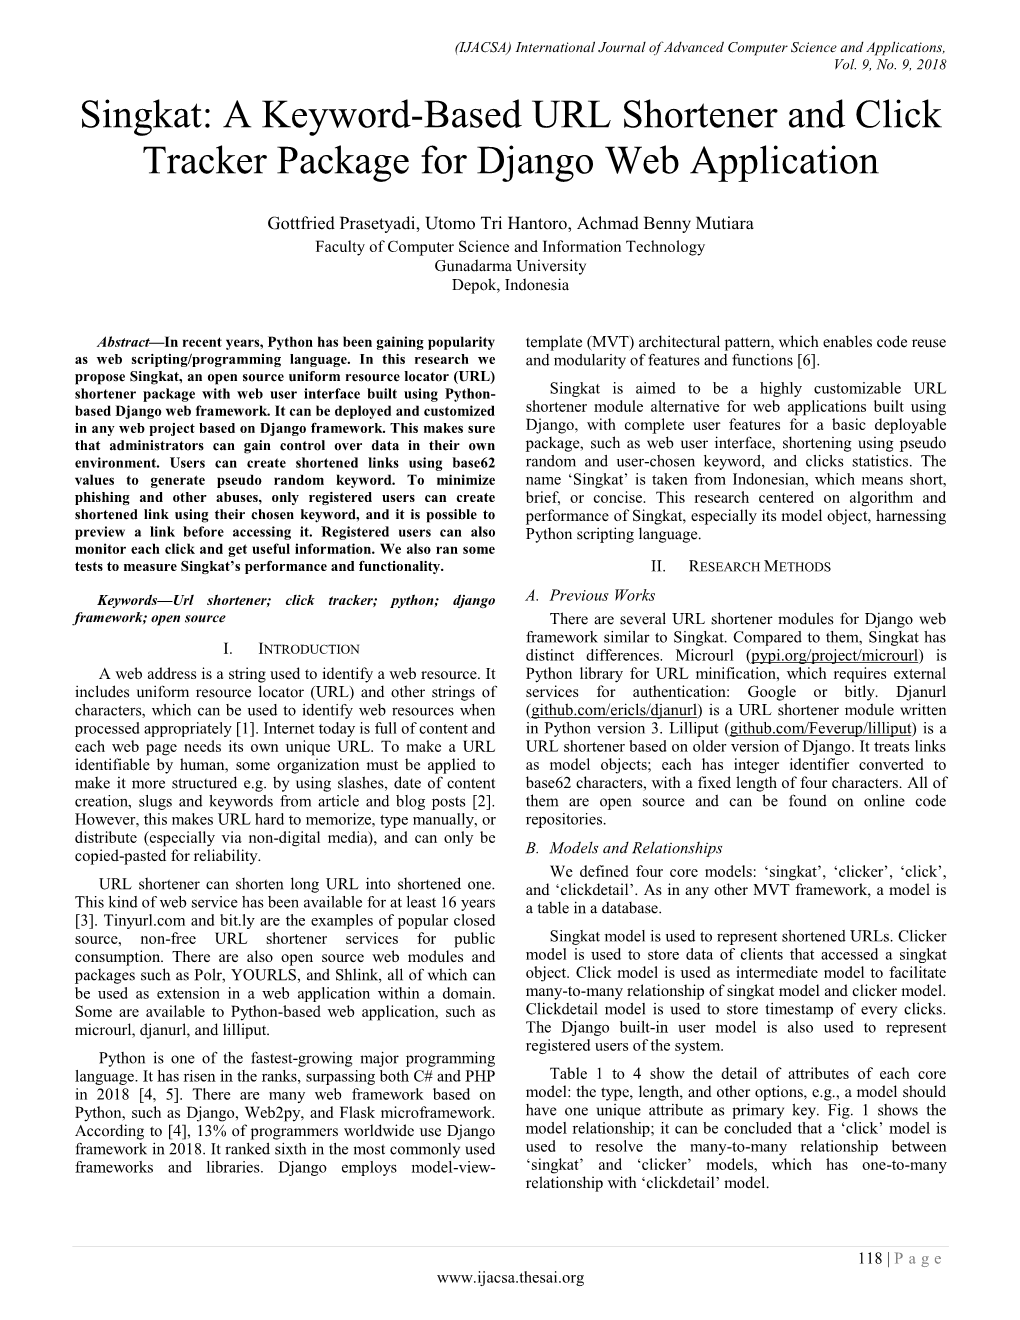 Singkat: a Keyword-Based URL Shortener and Click Tracker Package for Django Web Application